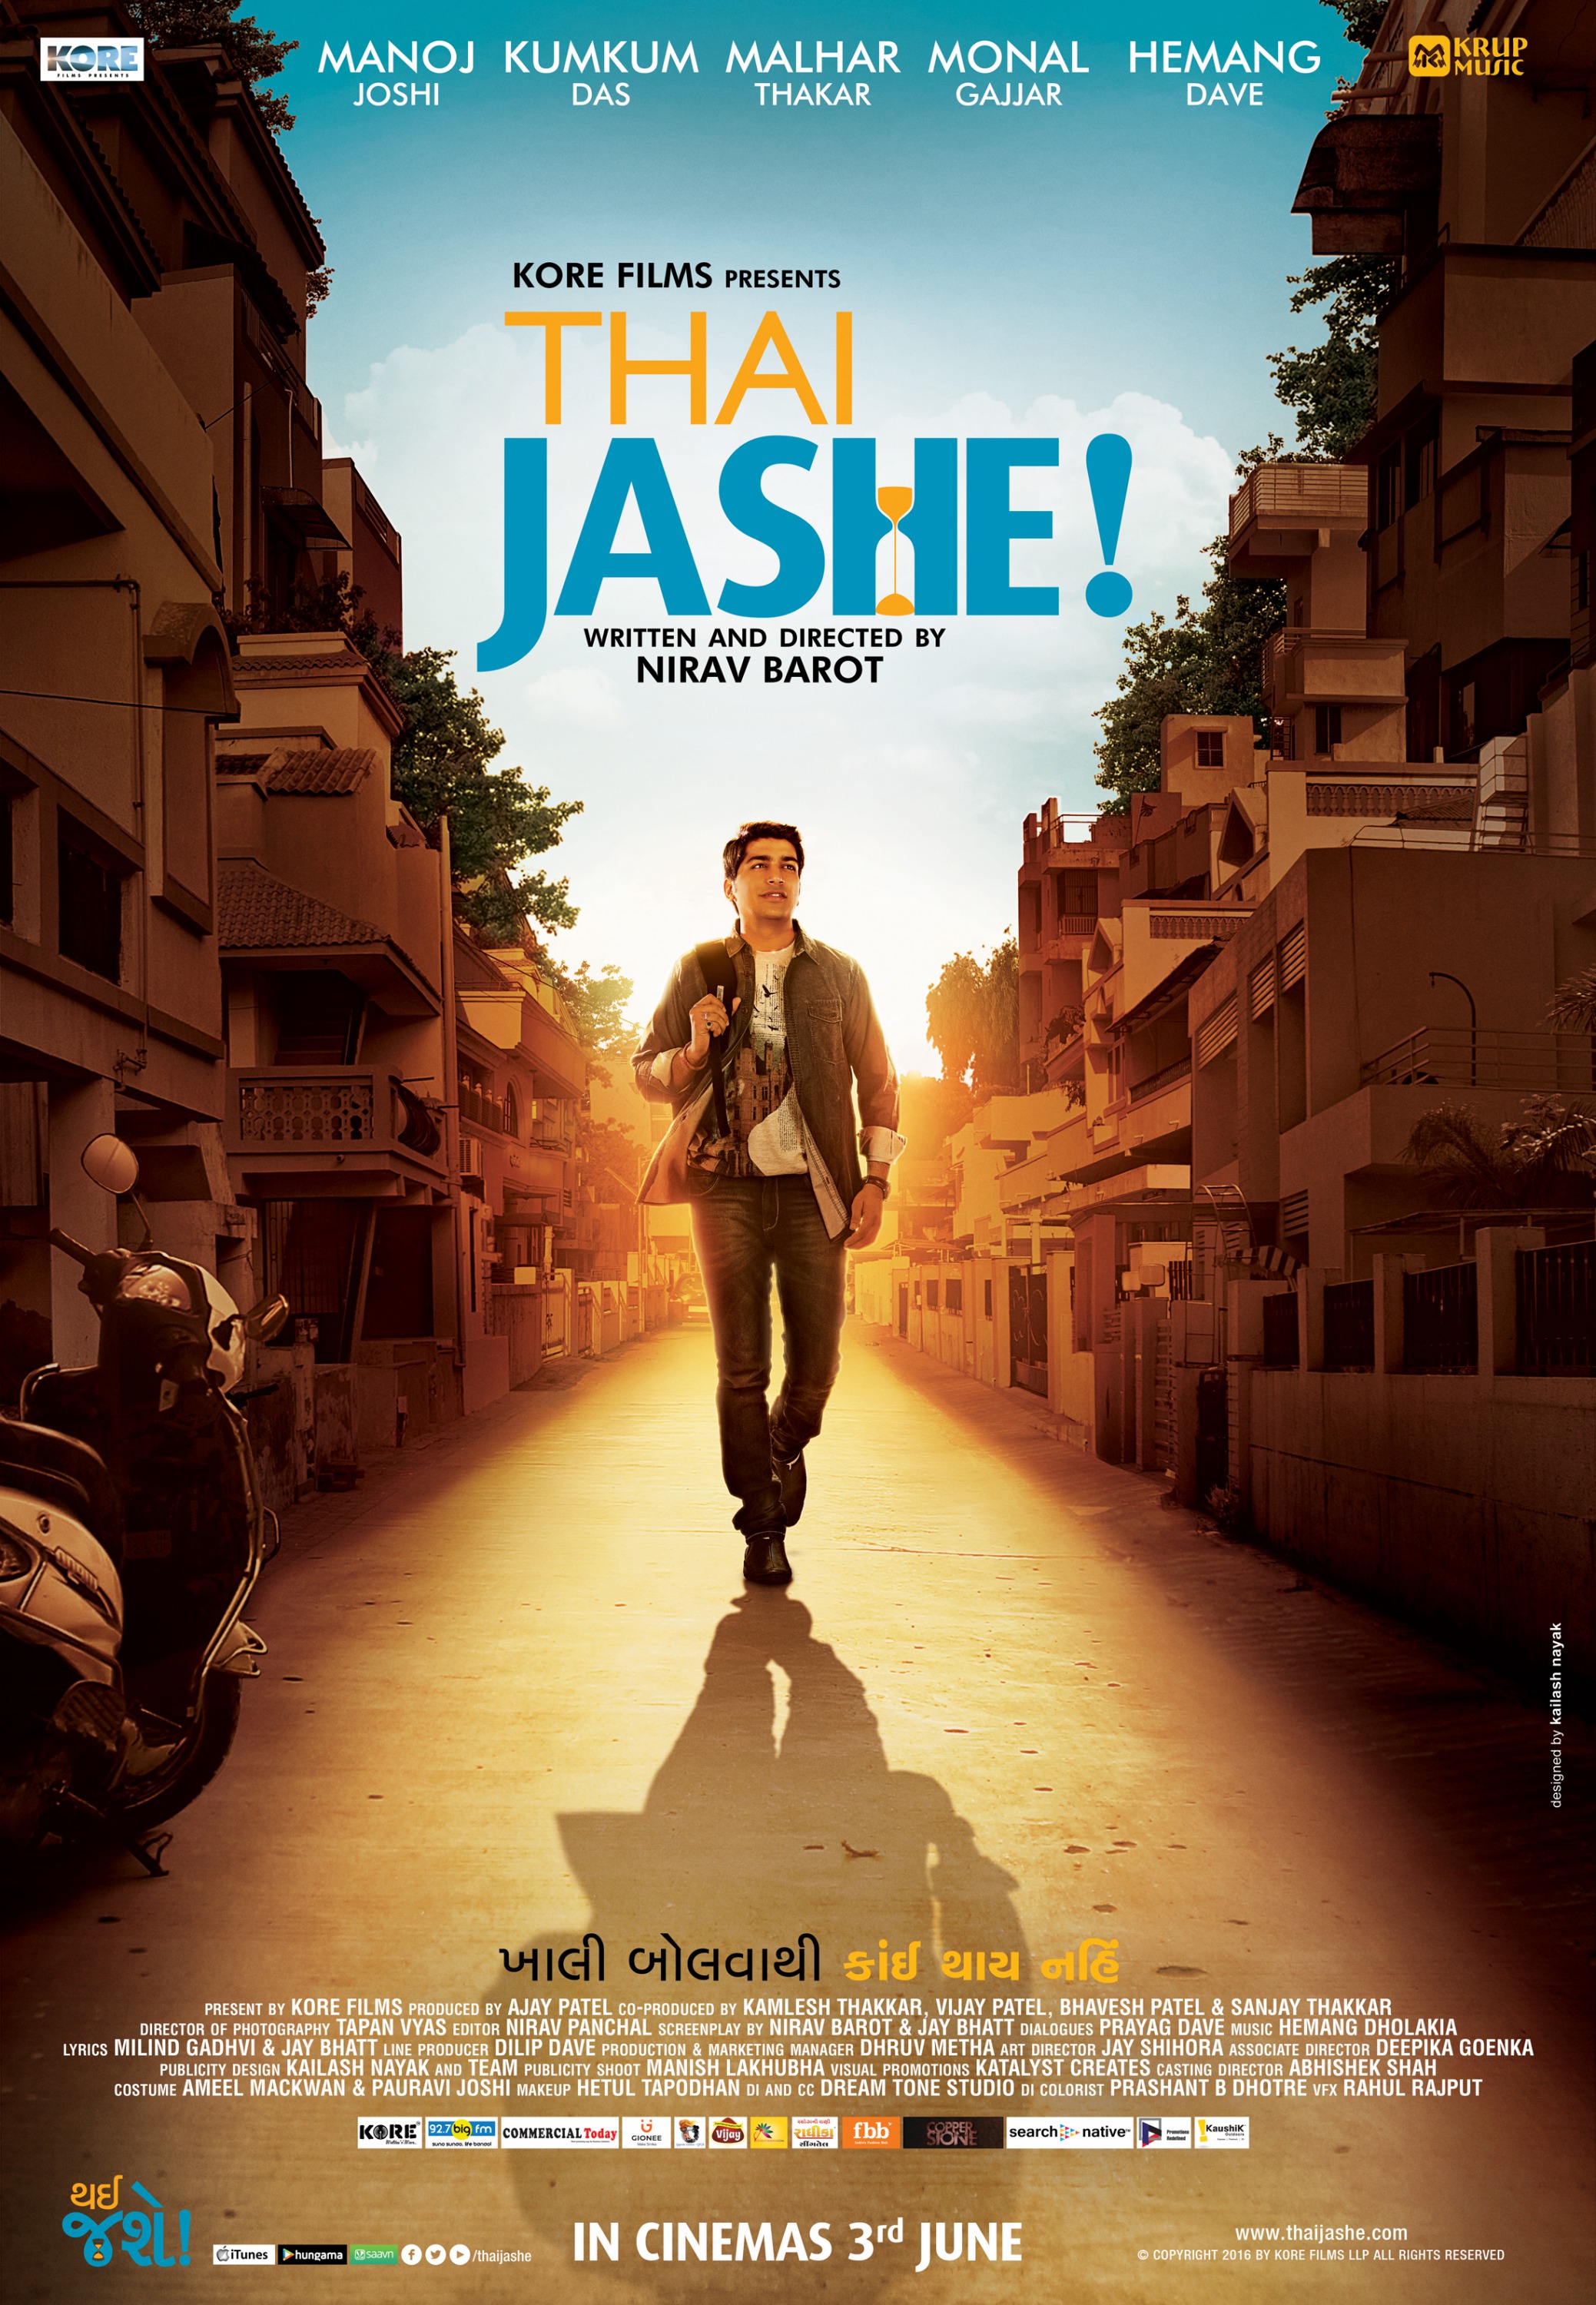 Mega Sized Movie Poster Image for Thai Jashe! (#2 of 5)